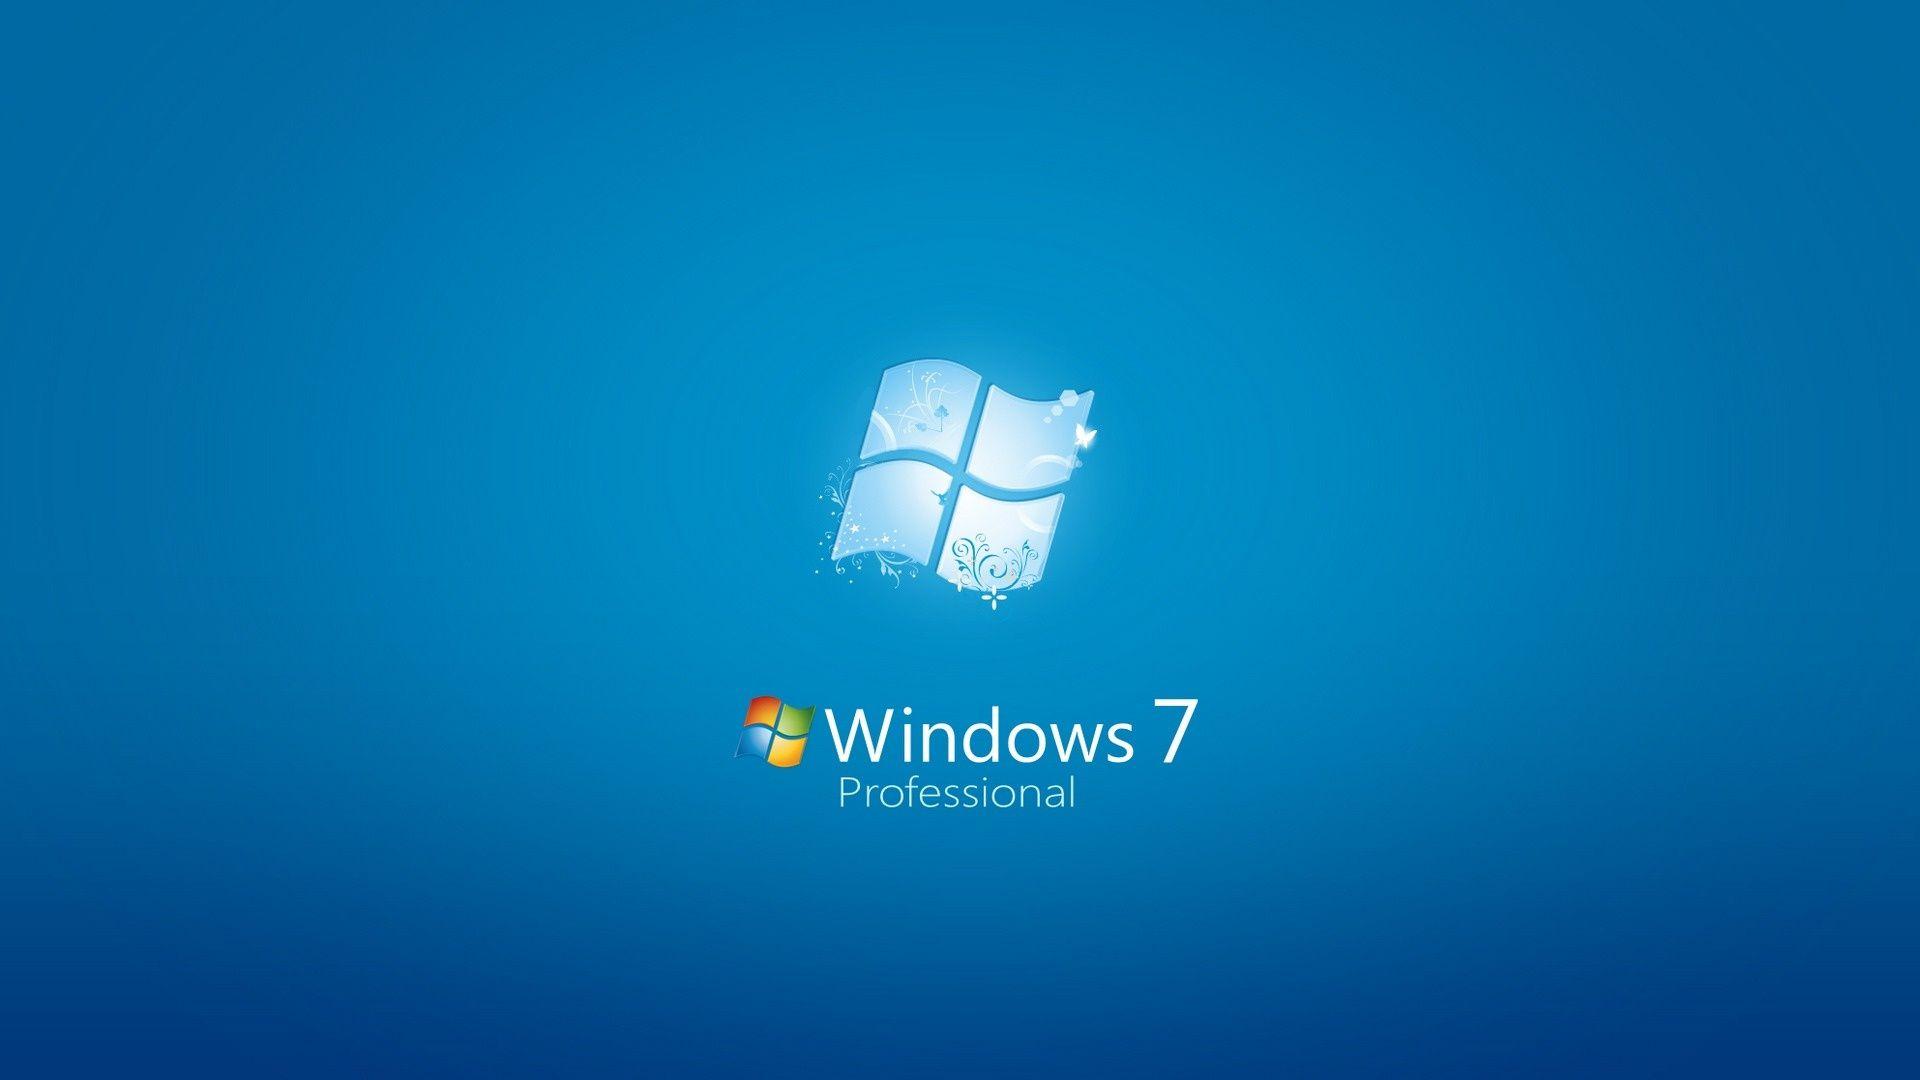 HD Wallpaper for Windows 7